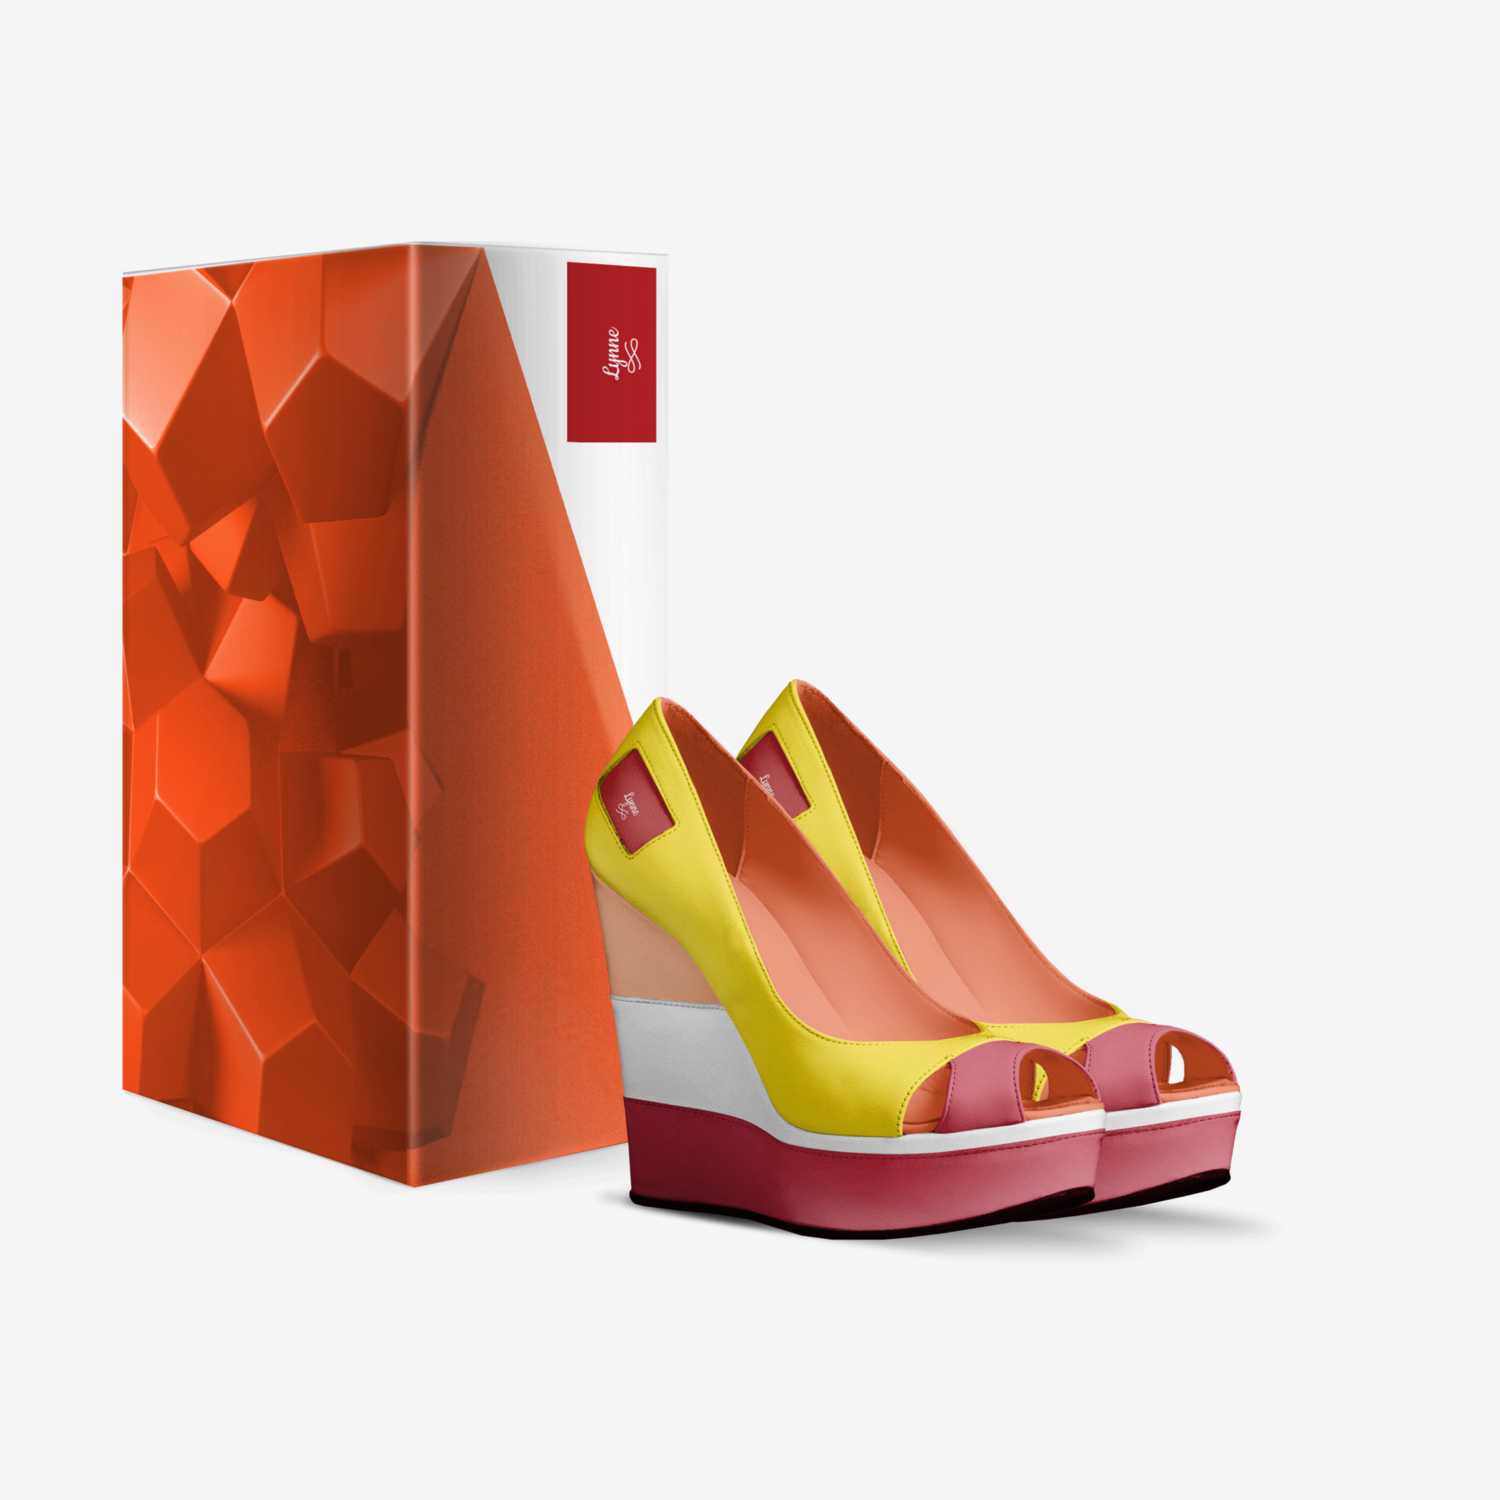 Lynne custom made in Italy shoes by Lynne Webb | Box view